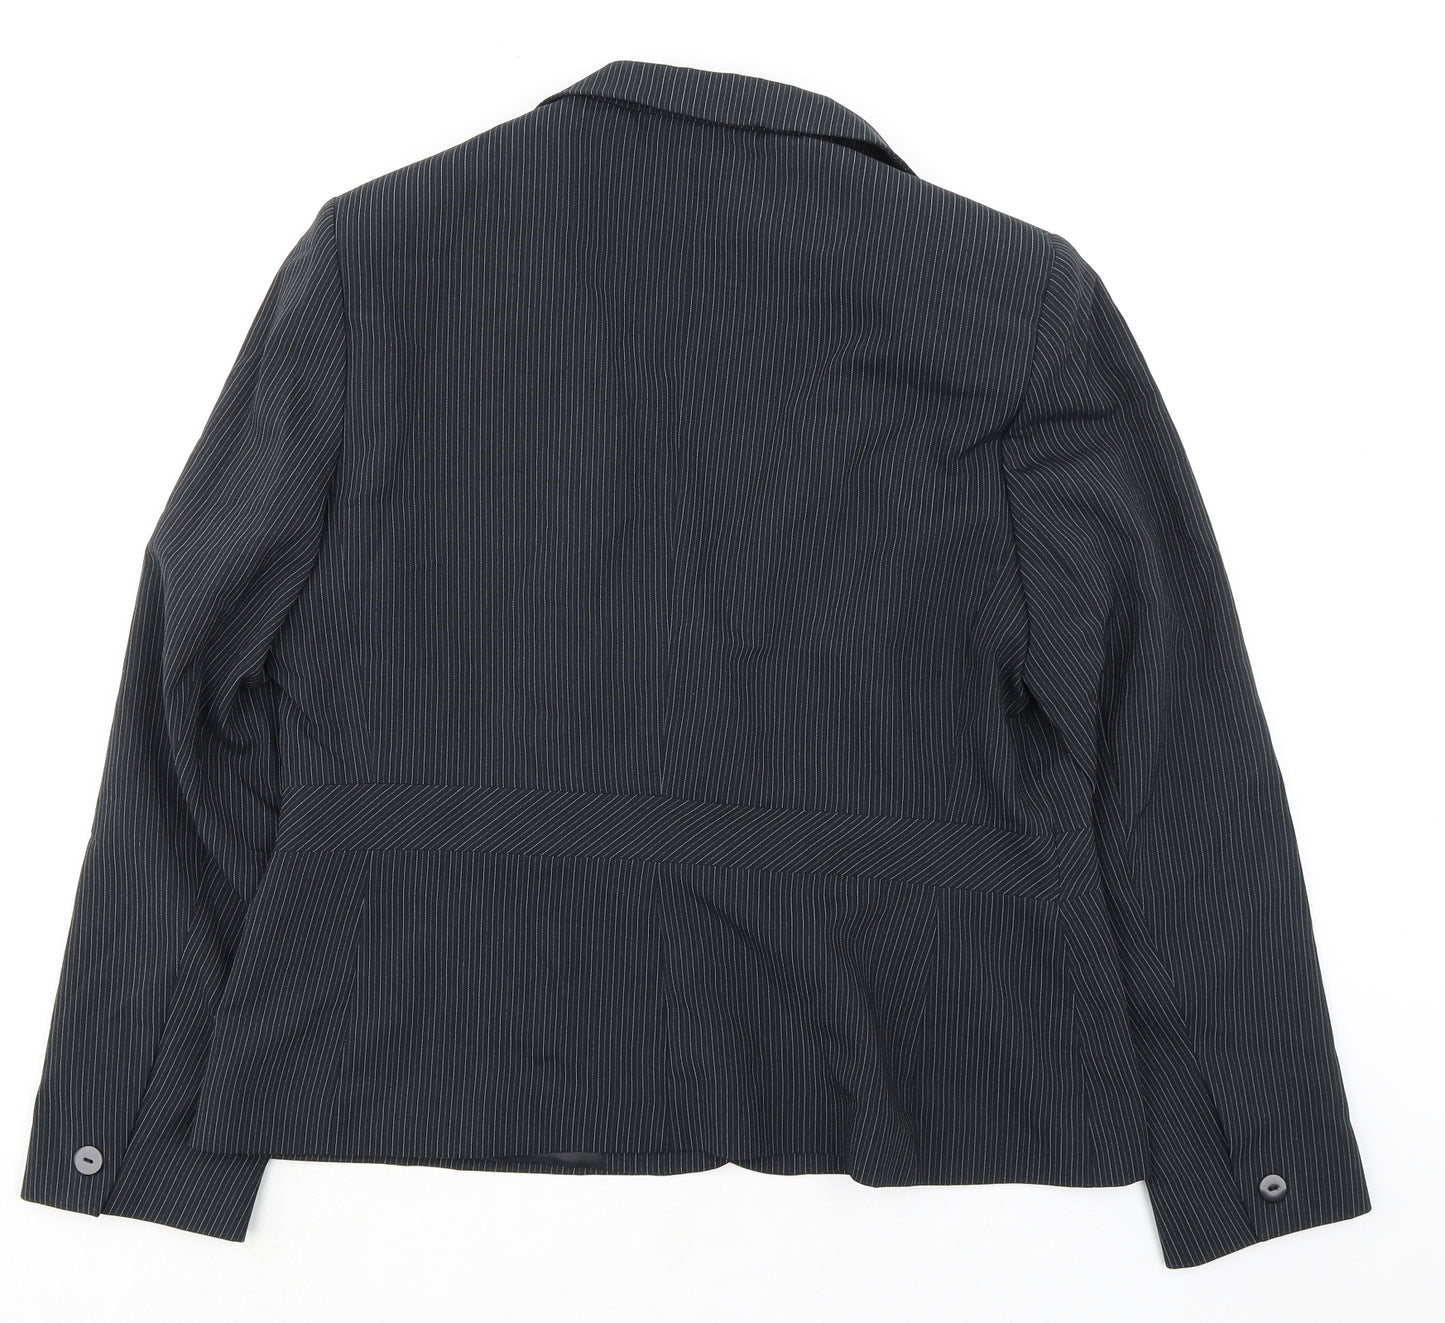 Florence+Fred Womens Black Striped Jacket Blazer Size 18 Button